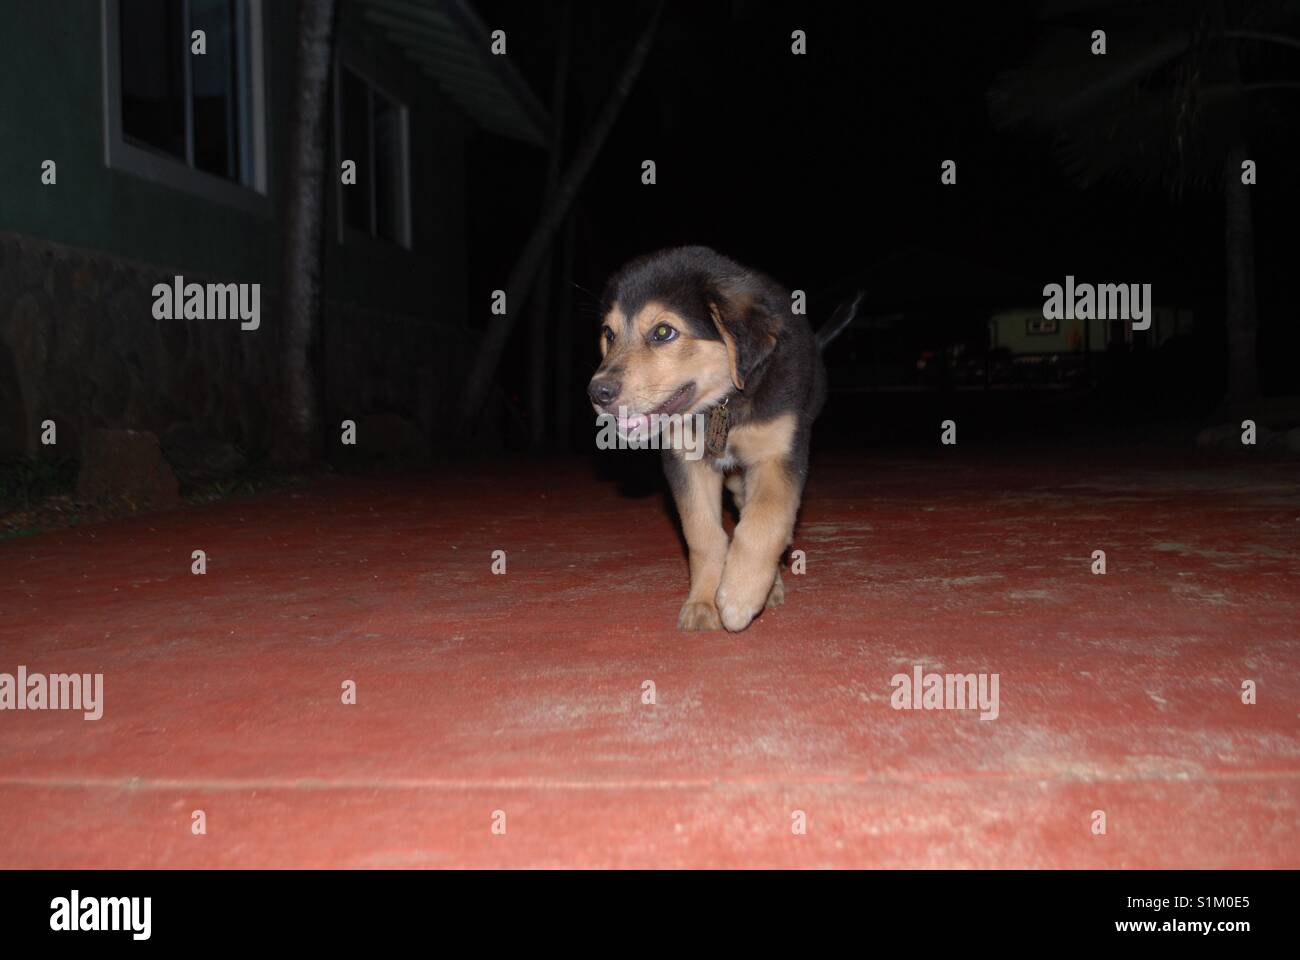 Puppy at night Stock Photo